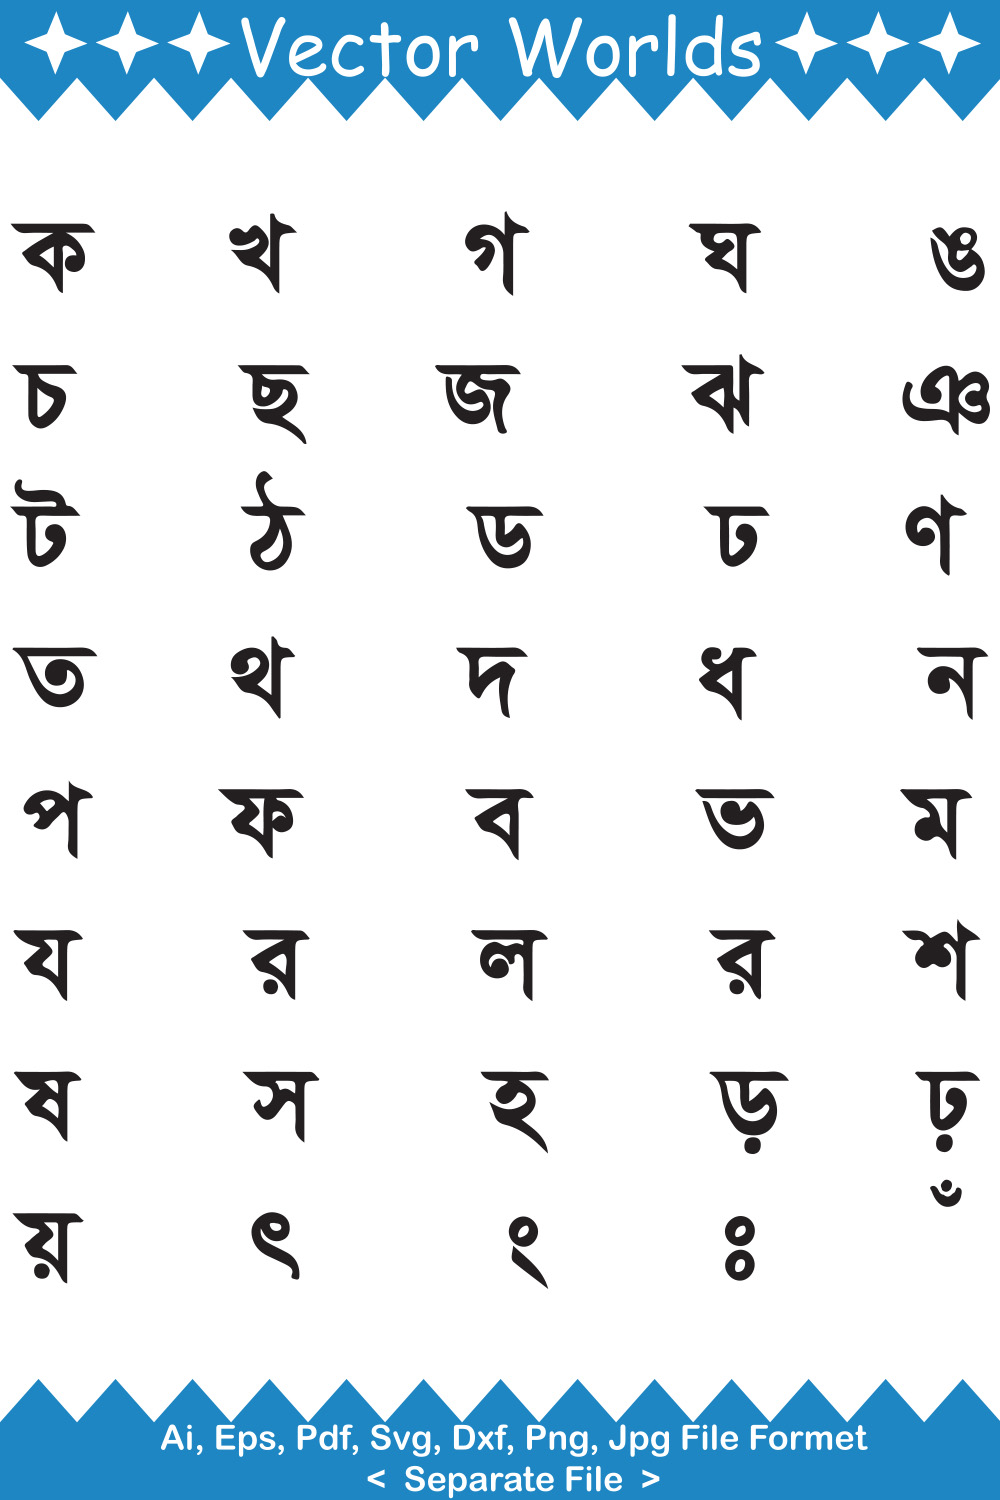 Image with irresistible Bengali alphabet in black.